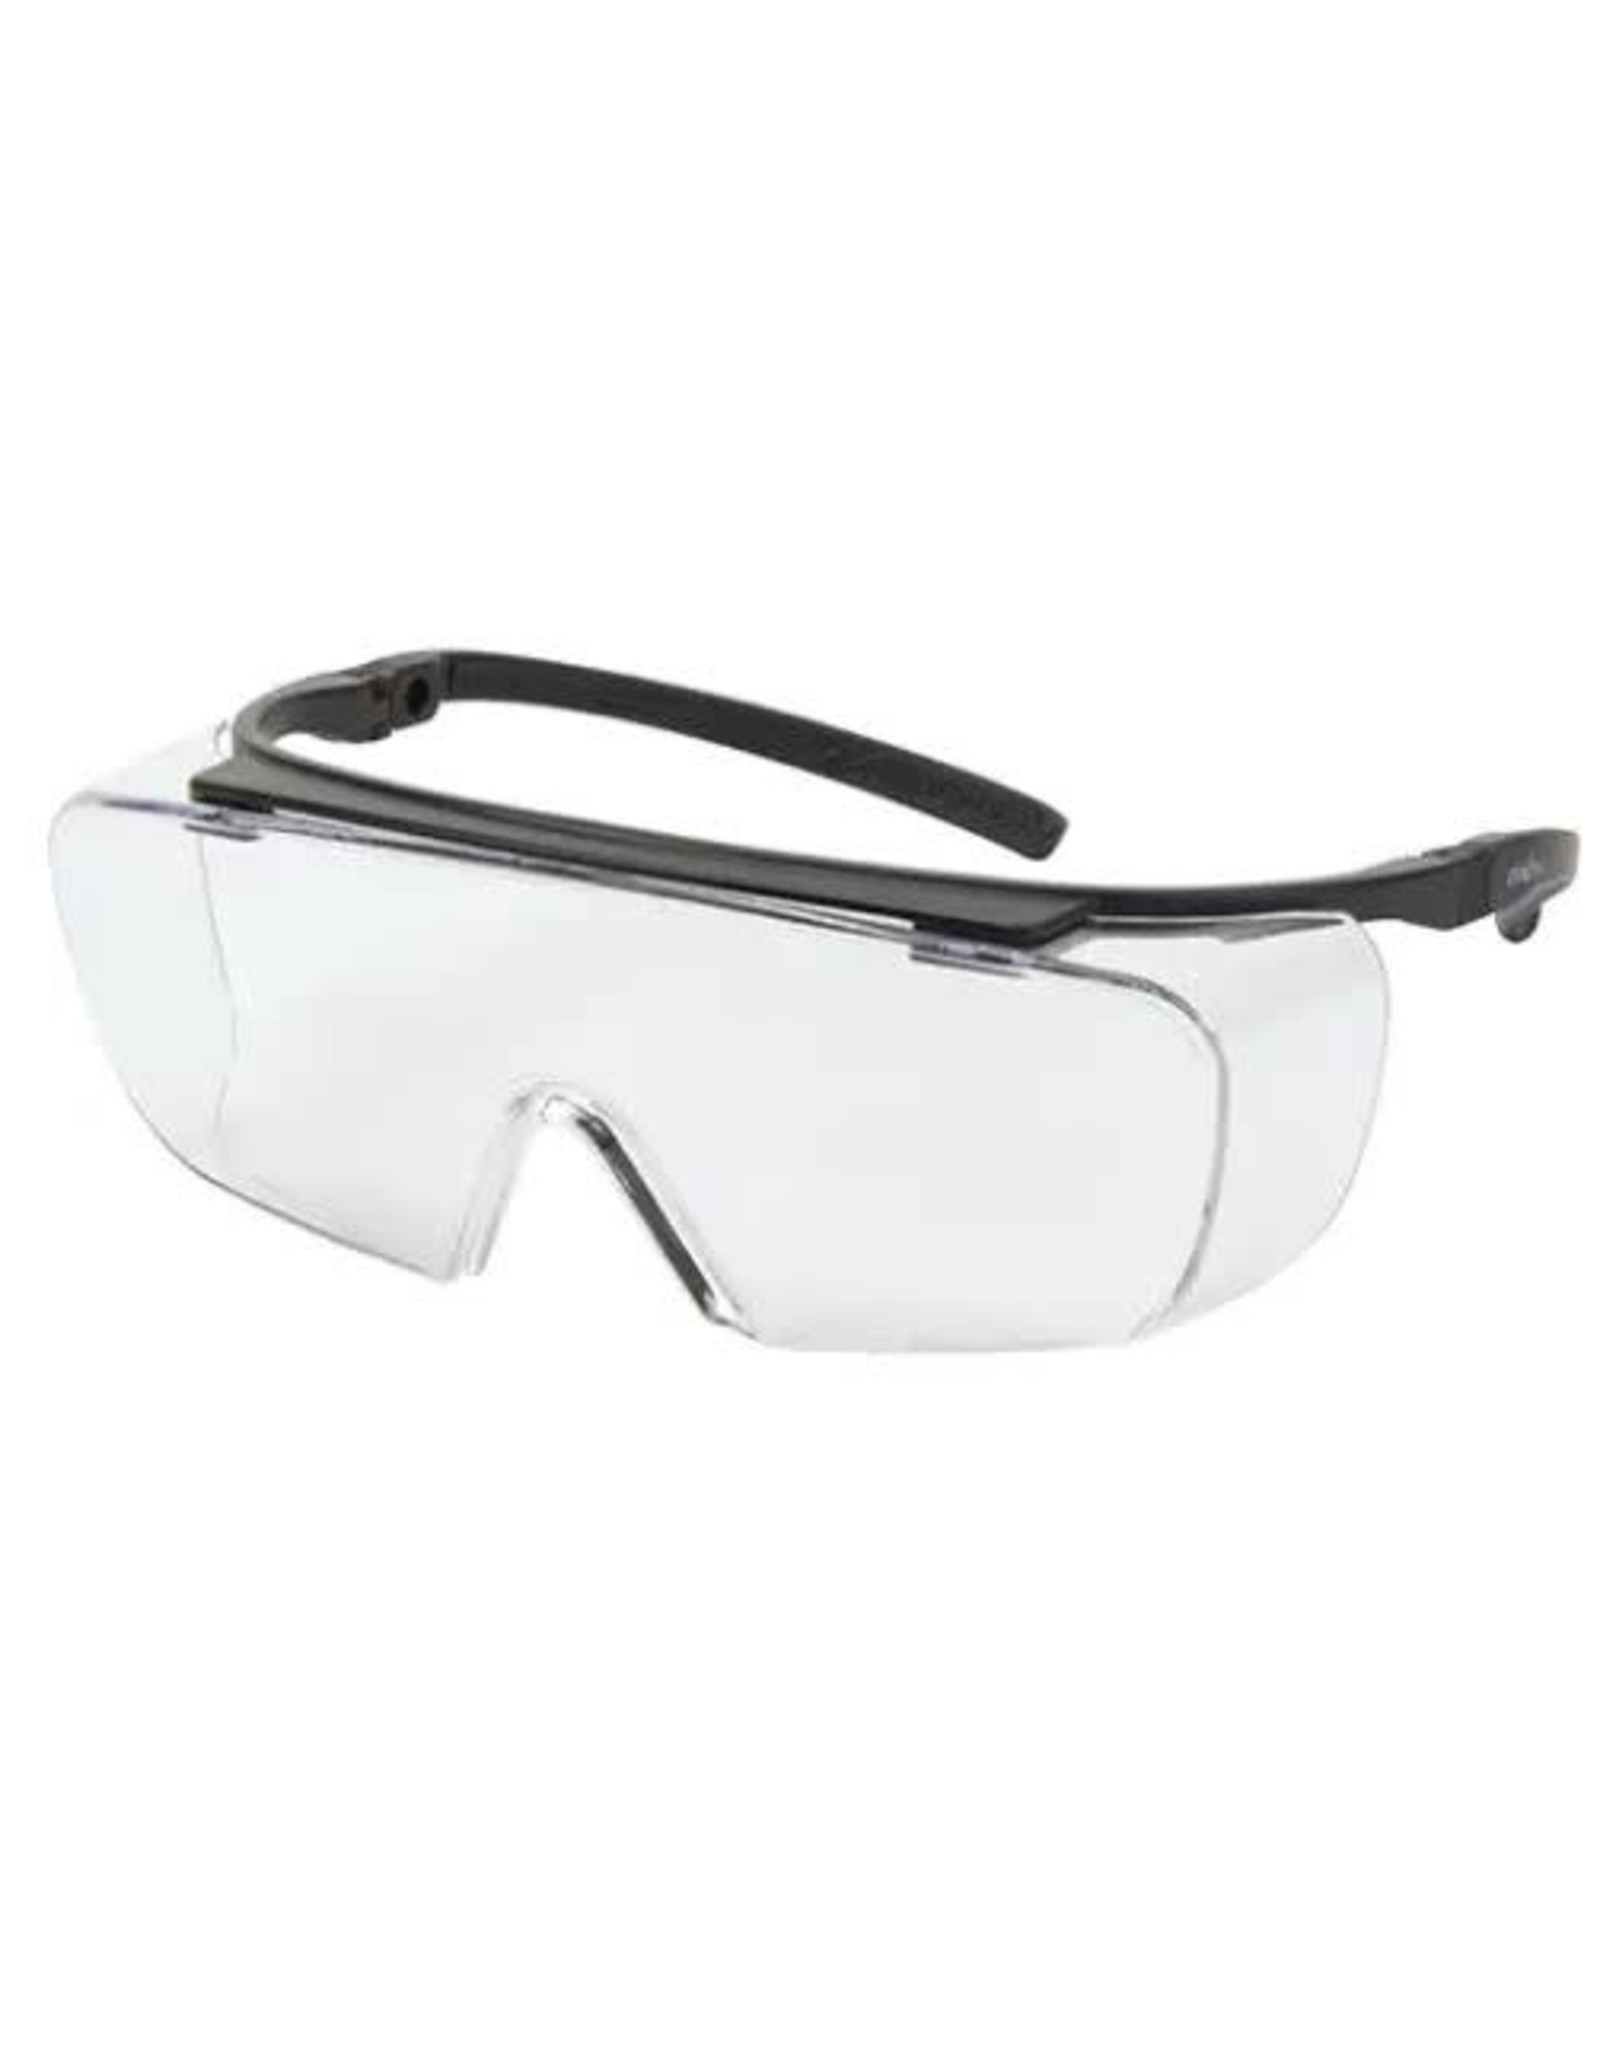 Zenith OTG Safety Glasses, A/S